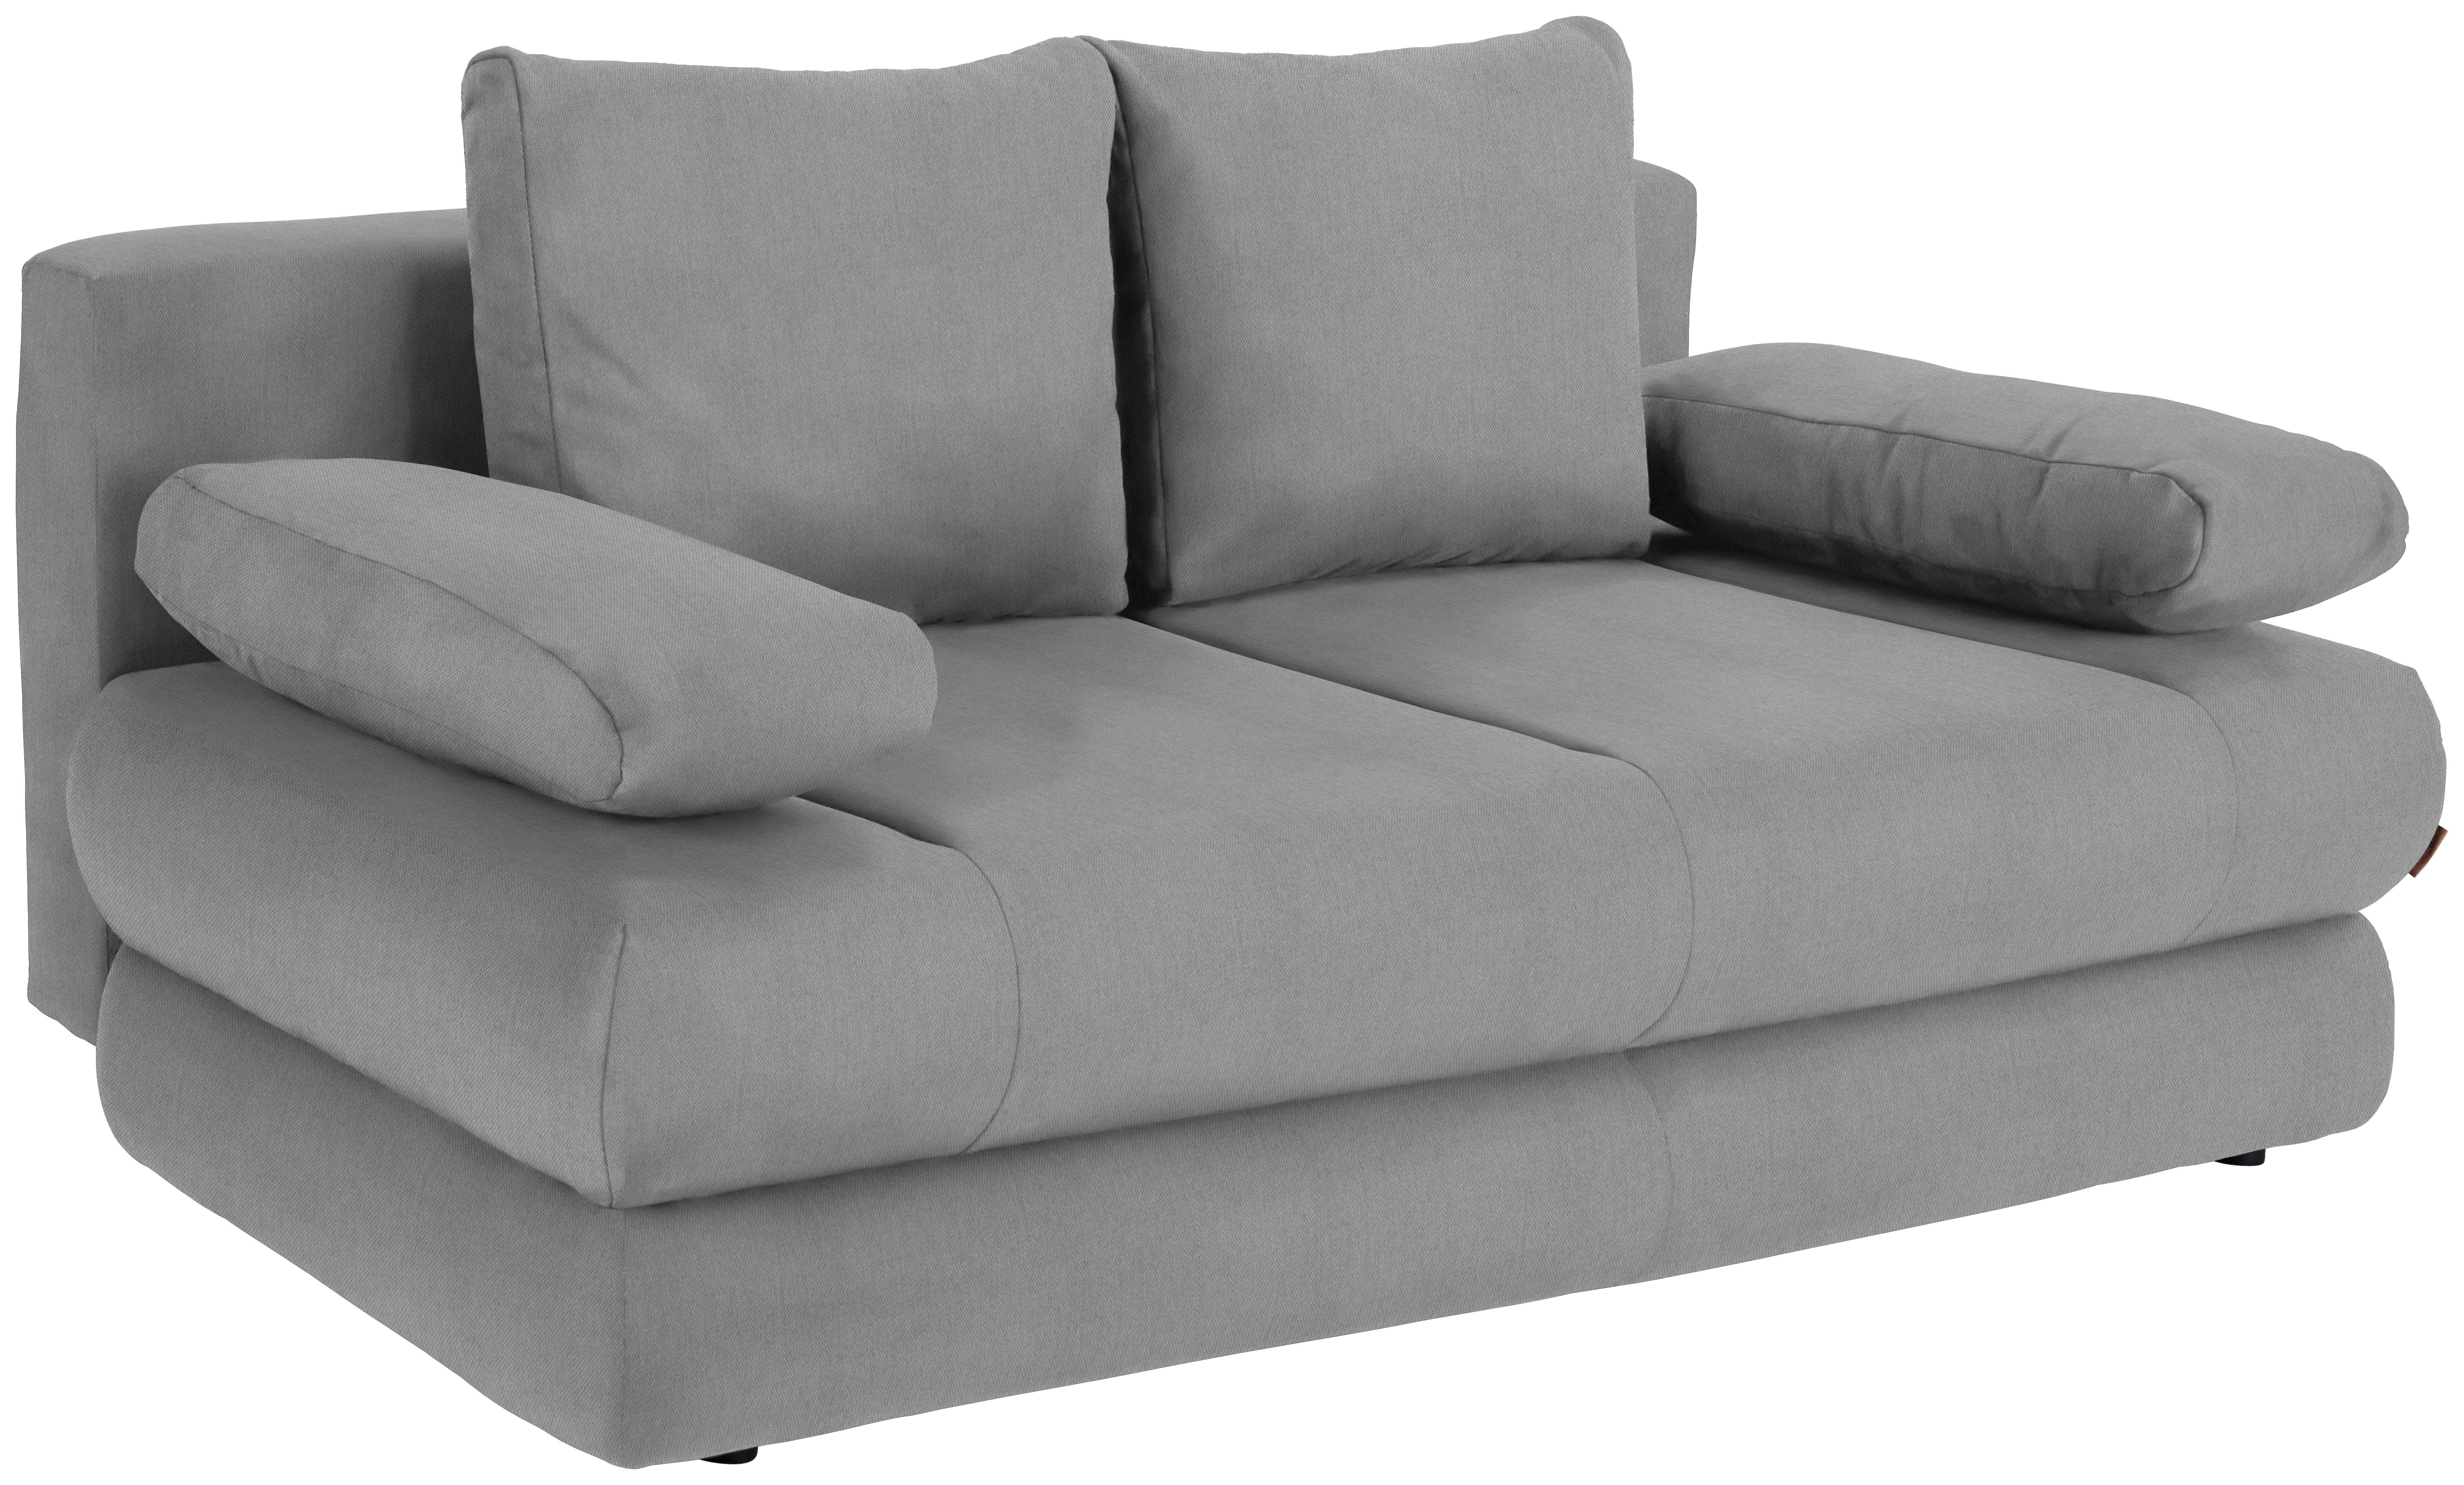 Canapea extensibilă Clipso - gri, Basics, textil (212/93/90cm) - Ondega